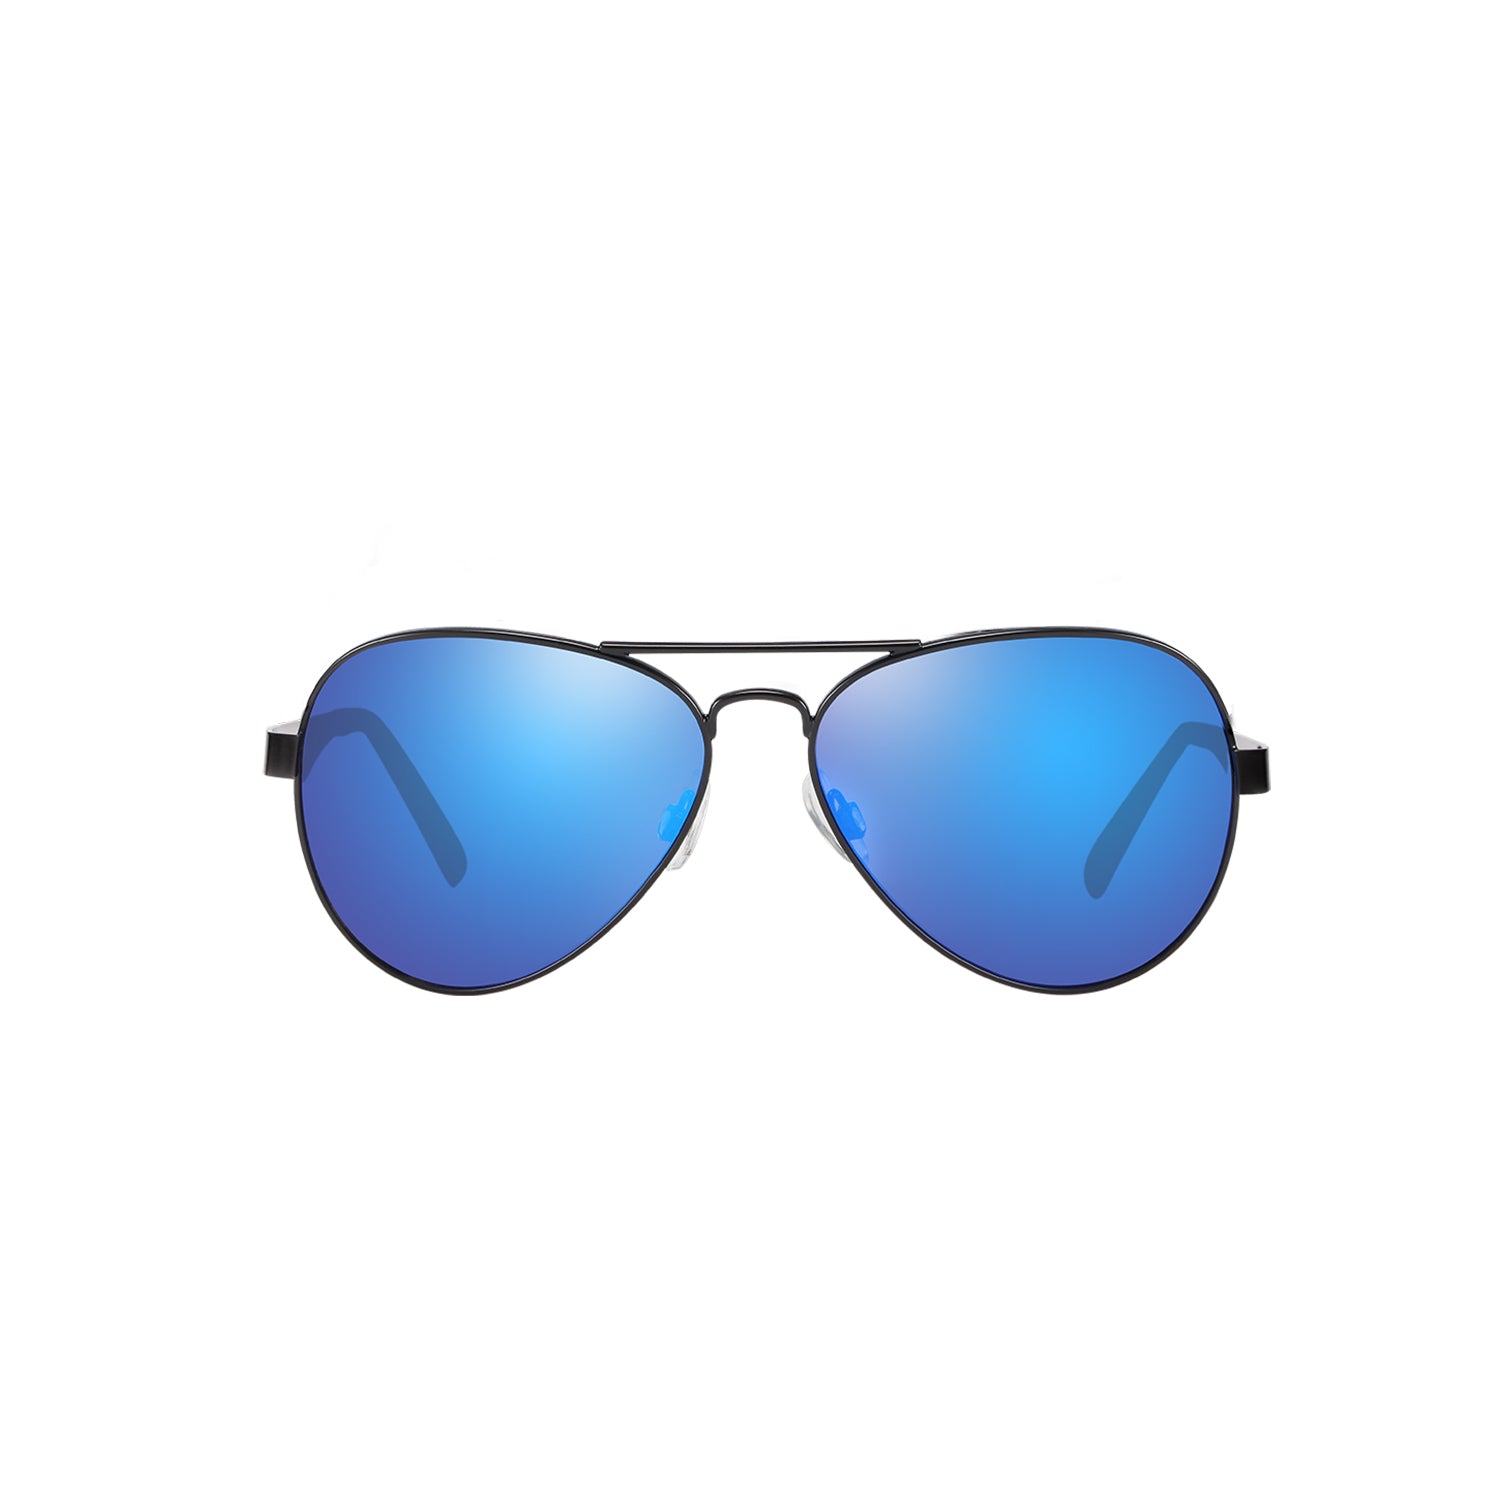 Sunglasses Elm Park Pilot in Light Blue